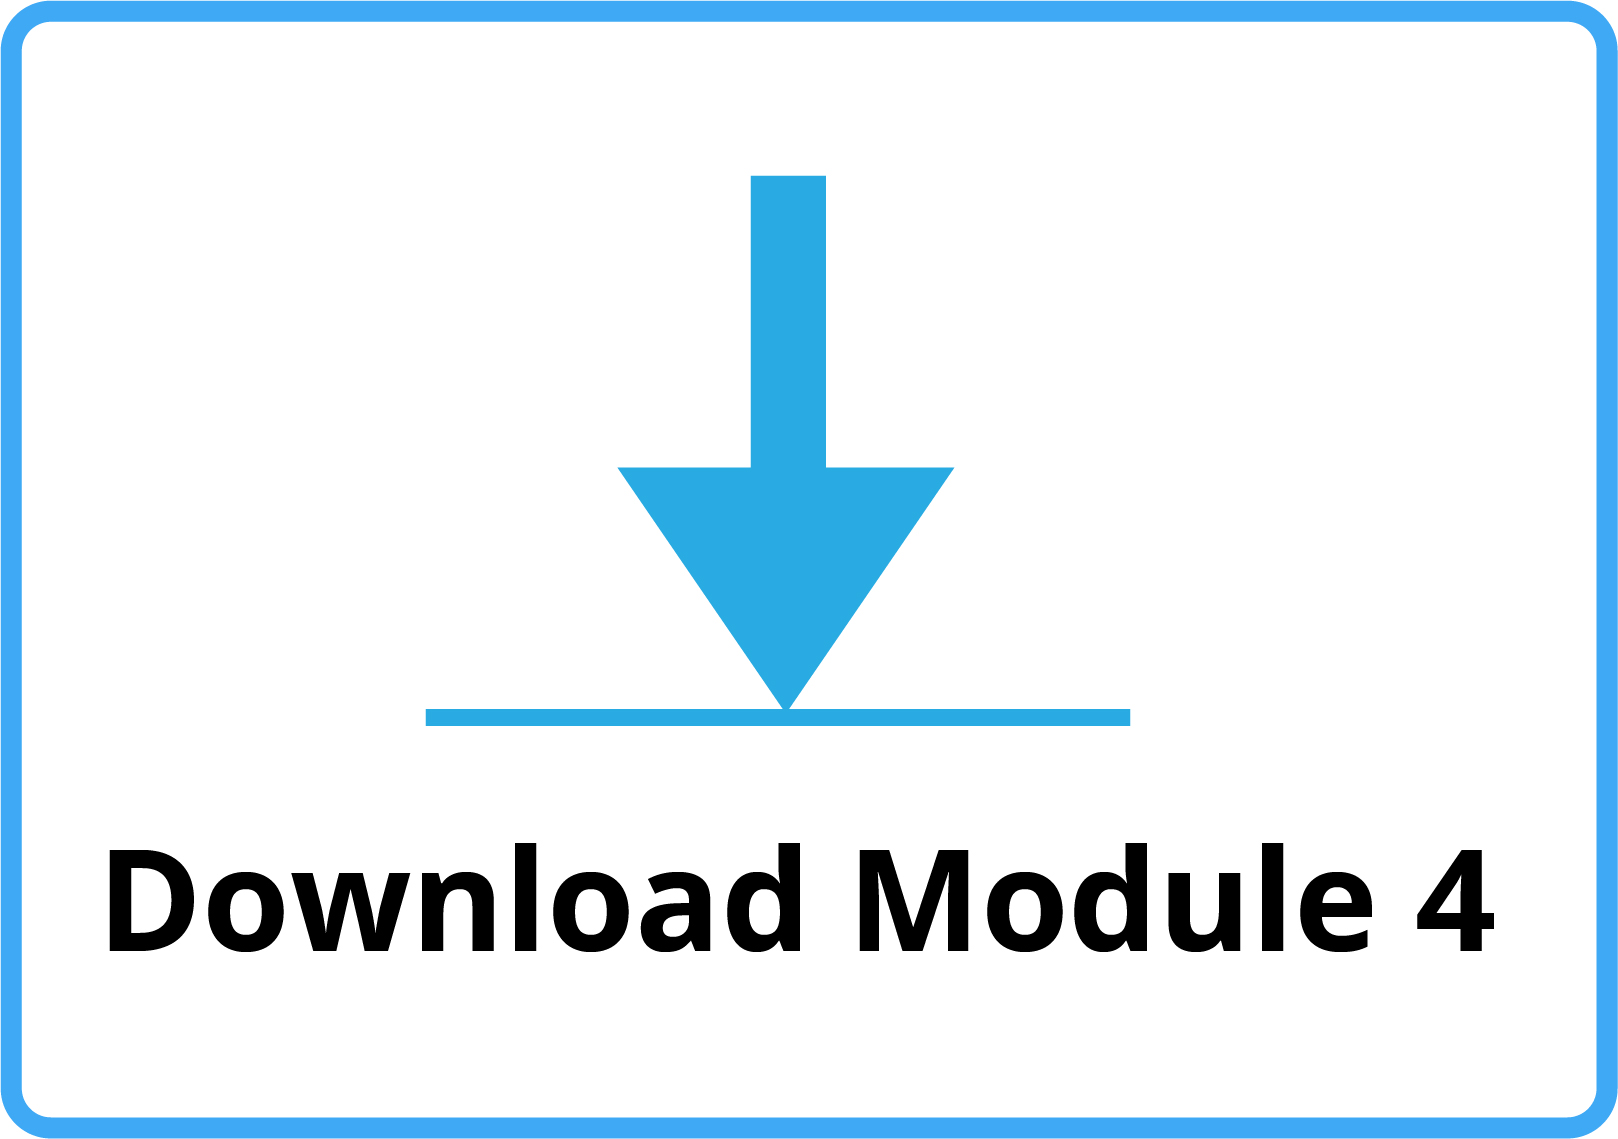 Download Module 4